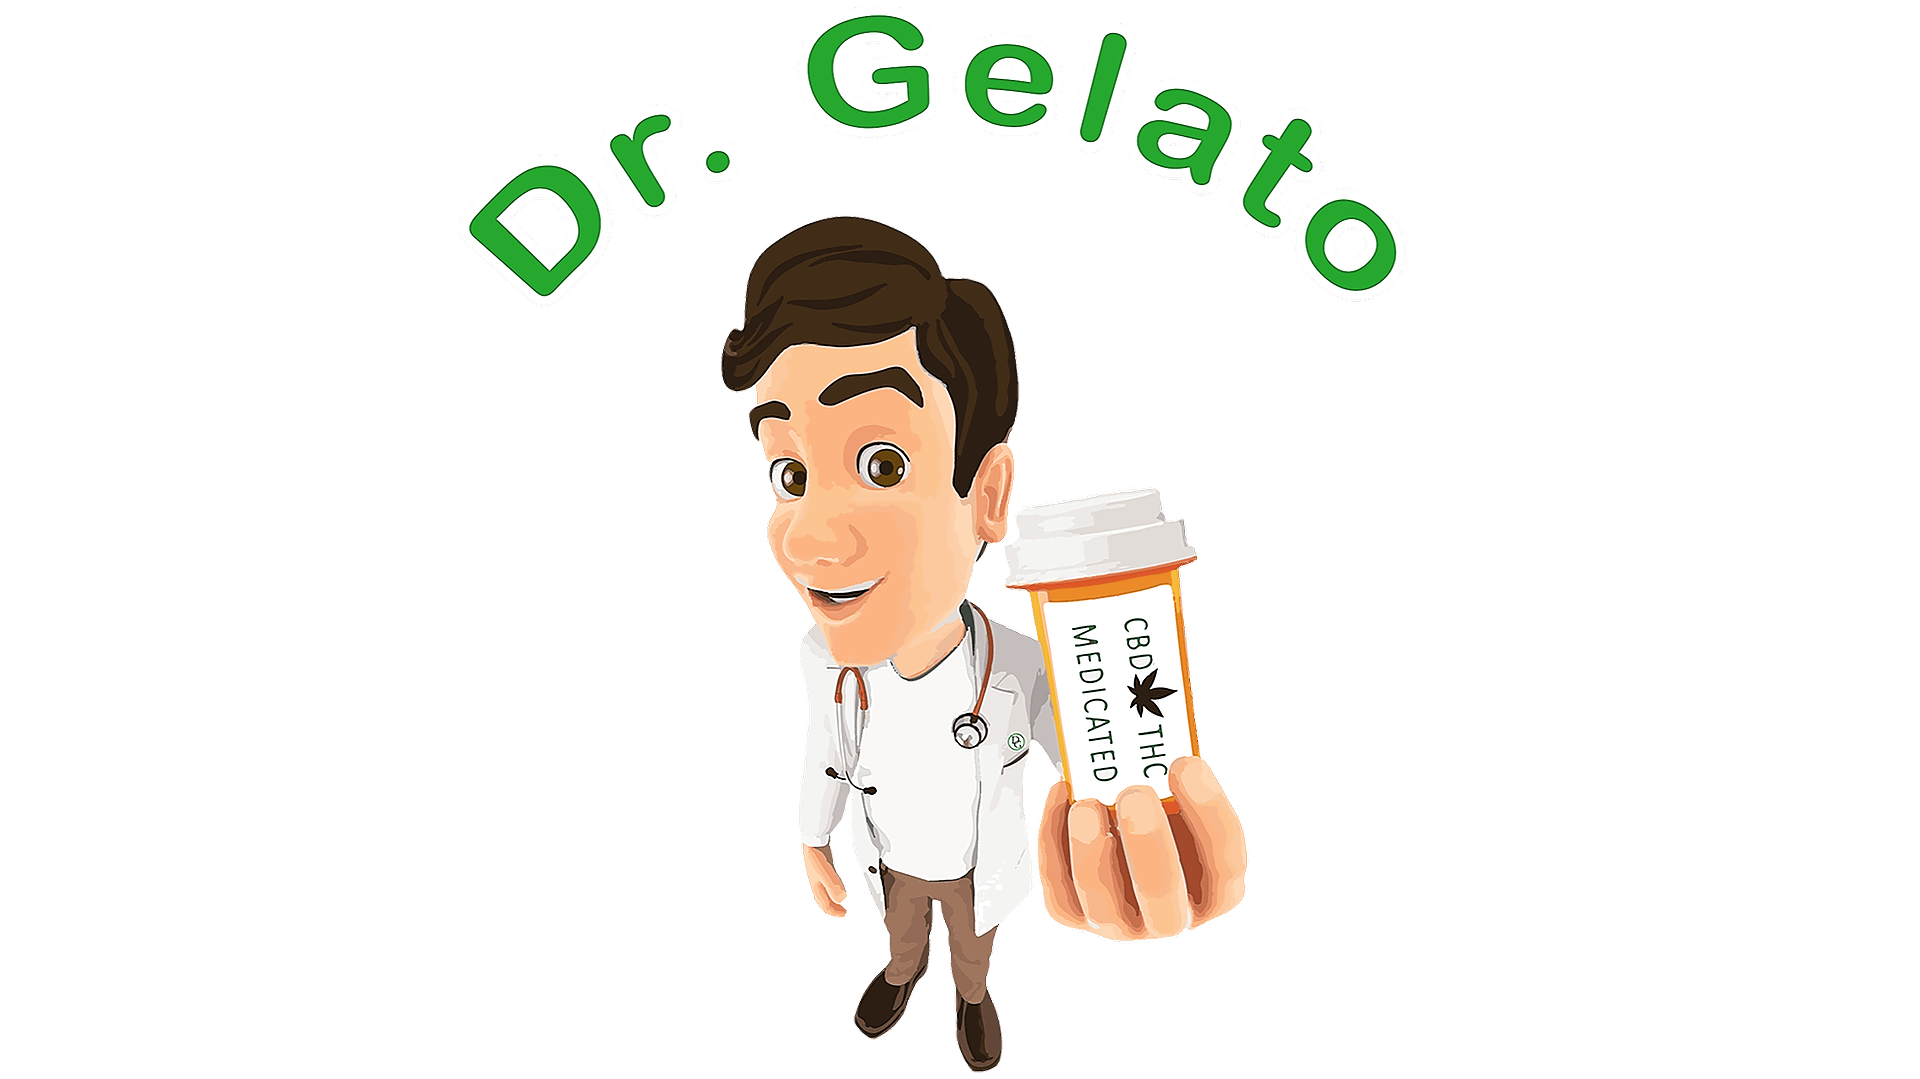 For Dr Gelato